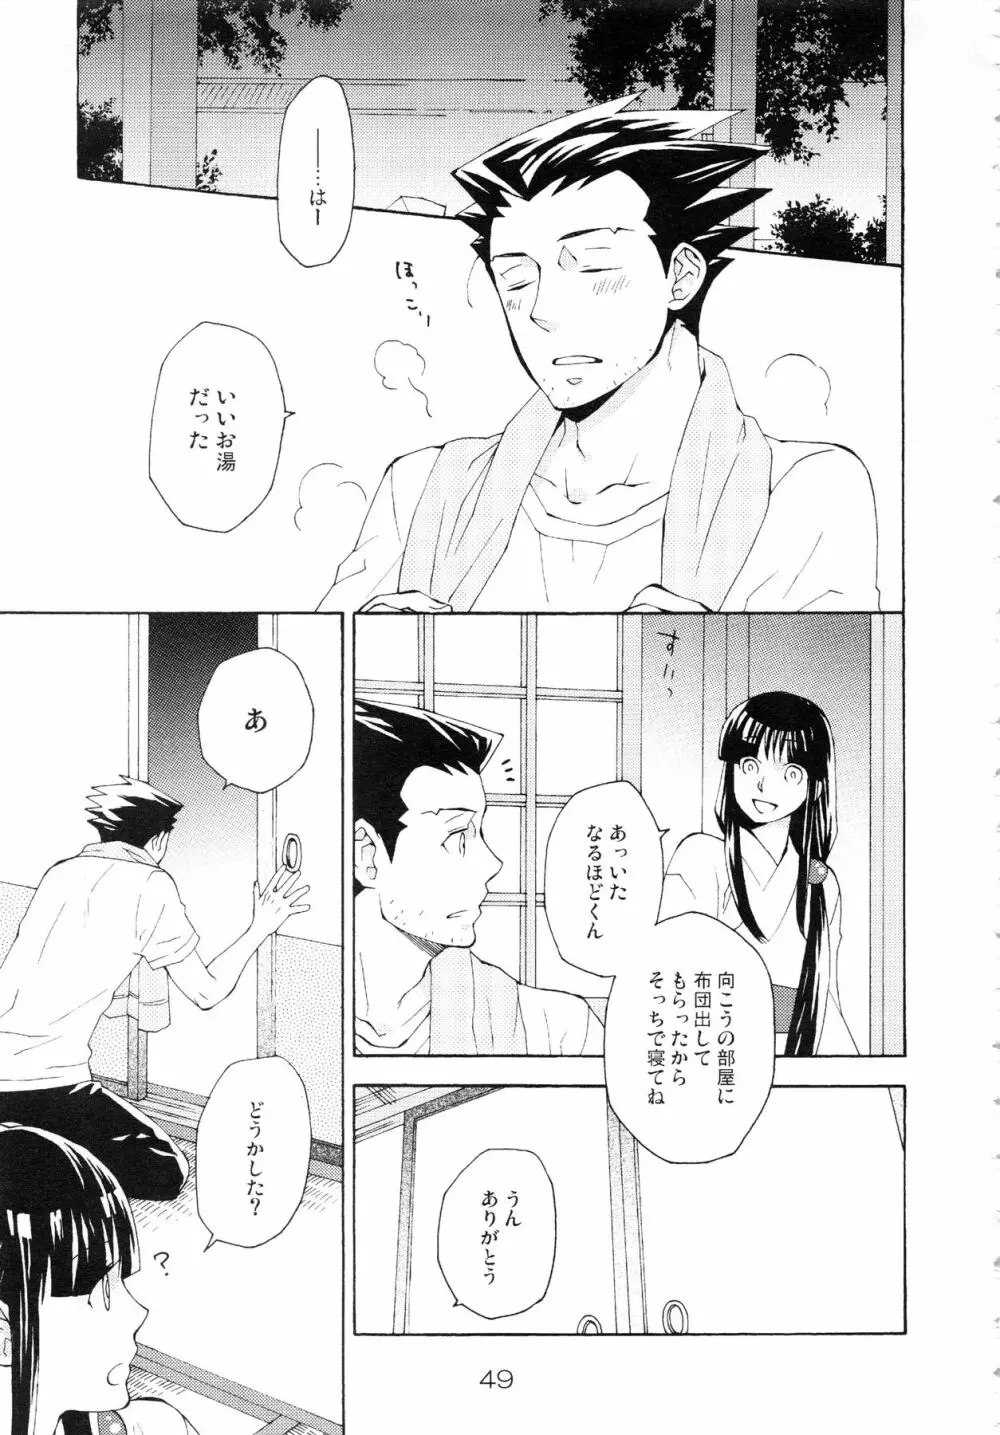 NARUMAYO R-18 48ページ